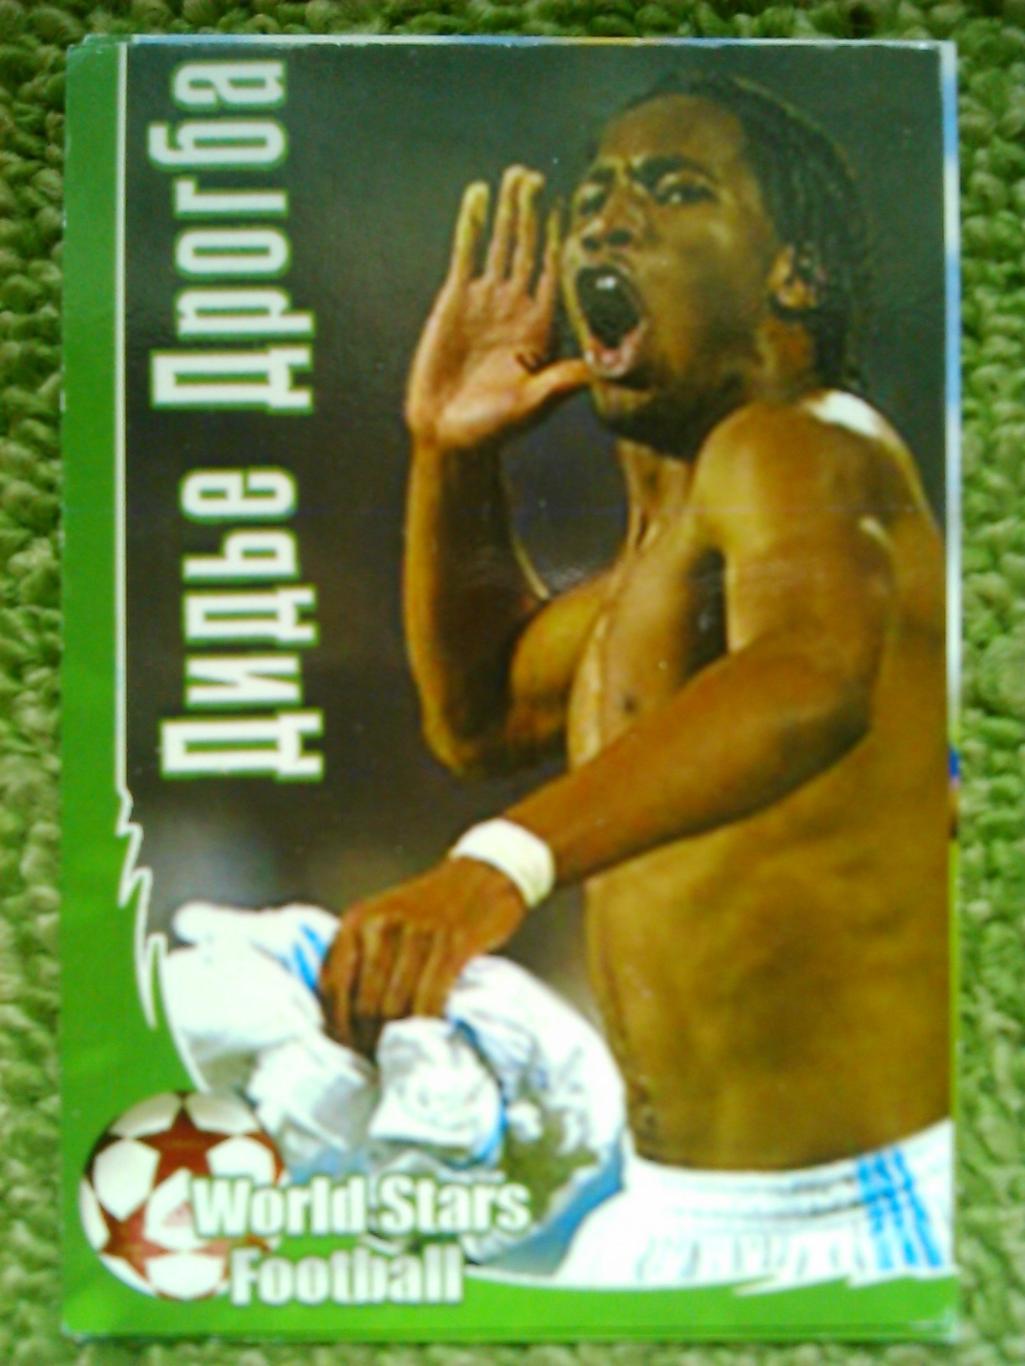 Дидье ДРОГБА. календарик World Stars Football 2008. оптом скидки до 45%